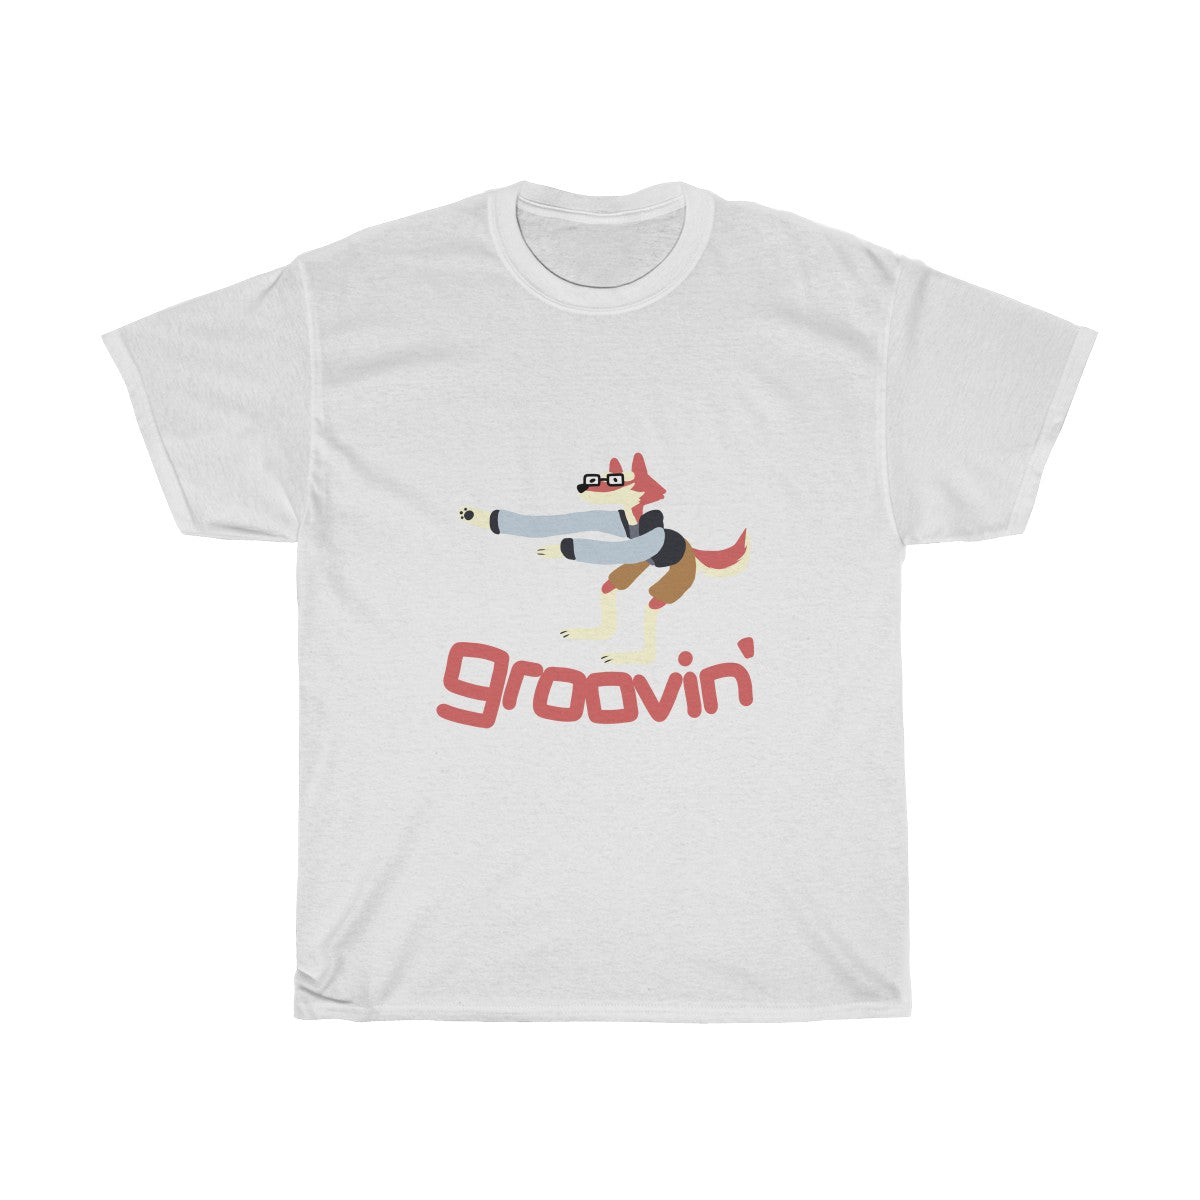 Groovin - T-Shirt T-Shirt Ooka White S 